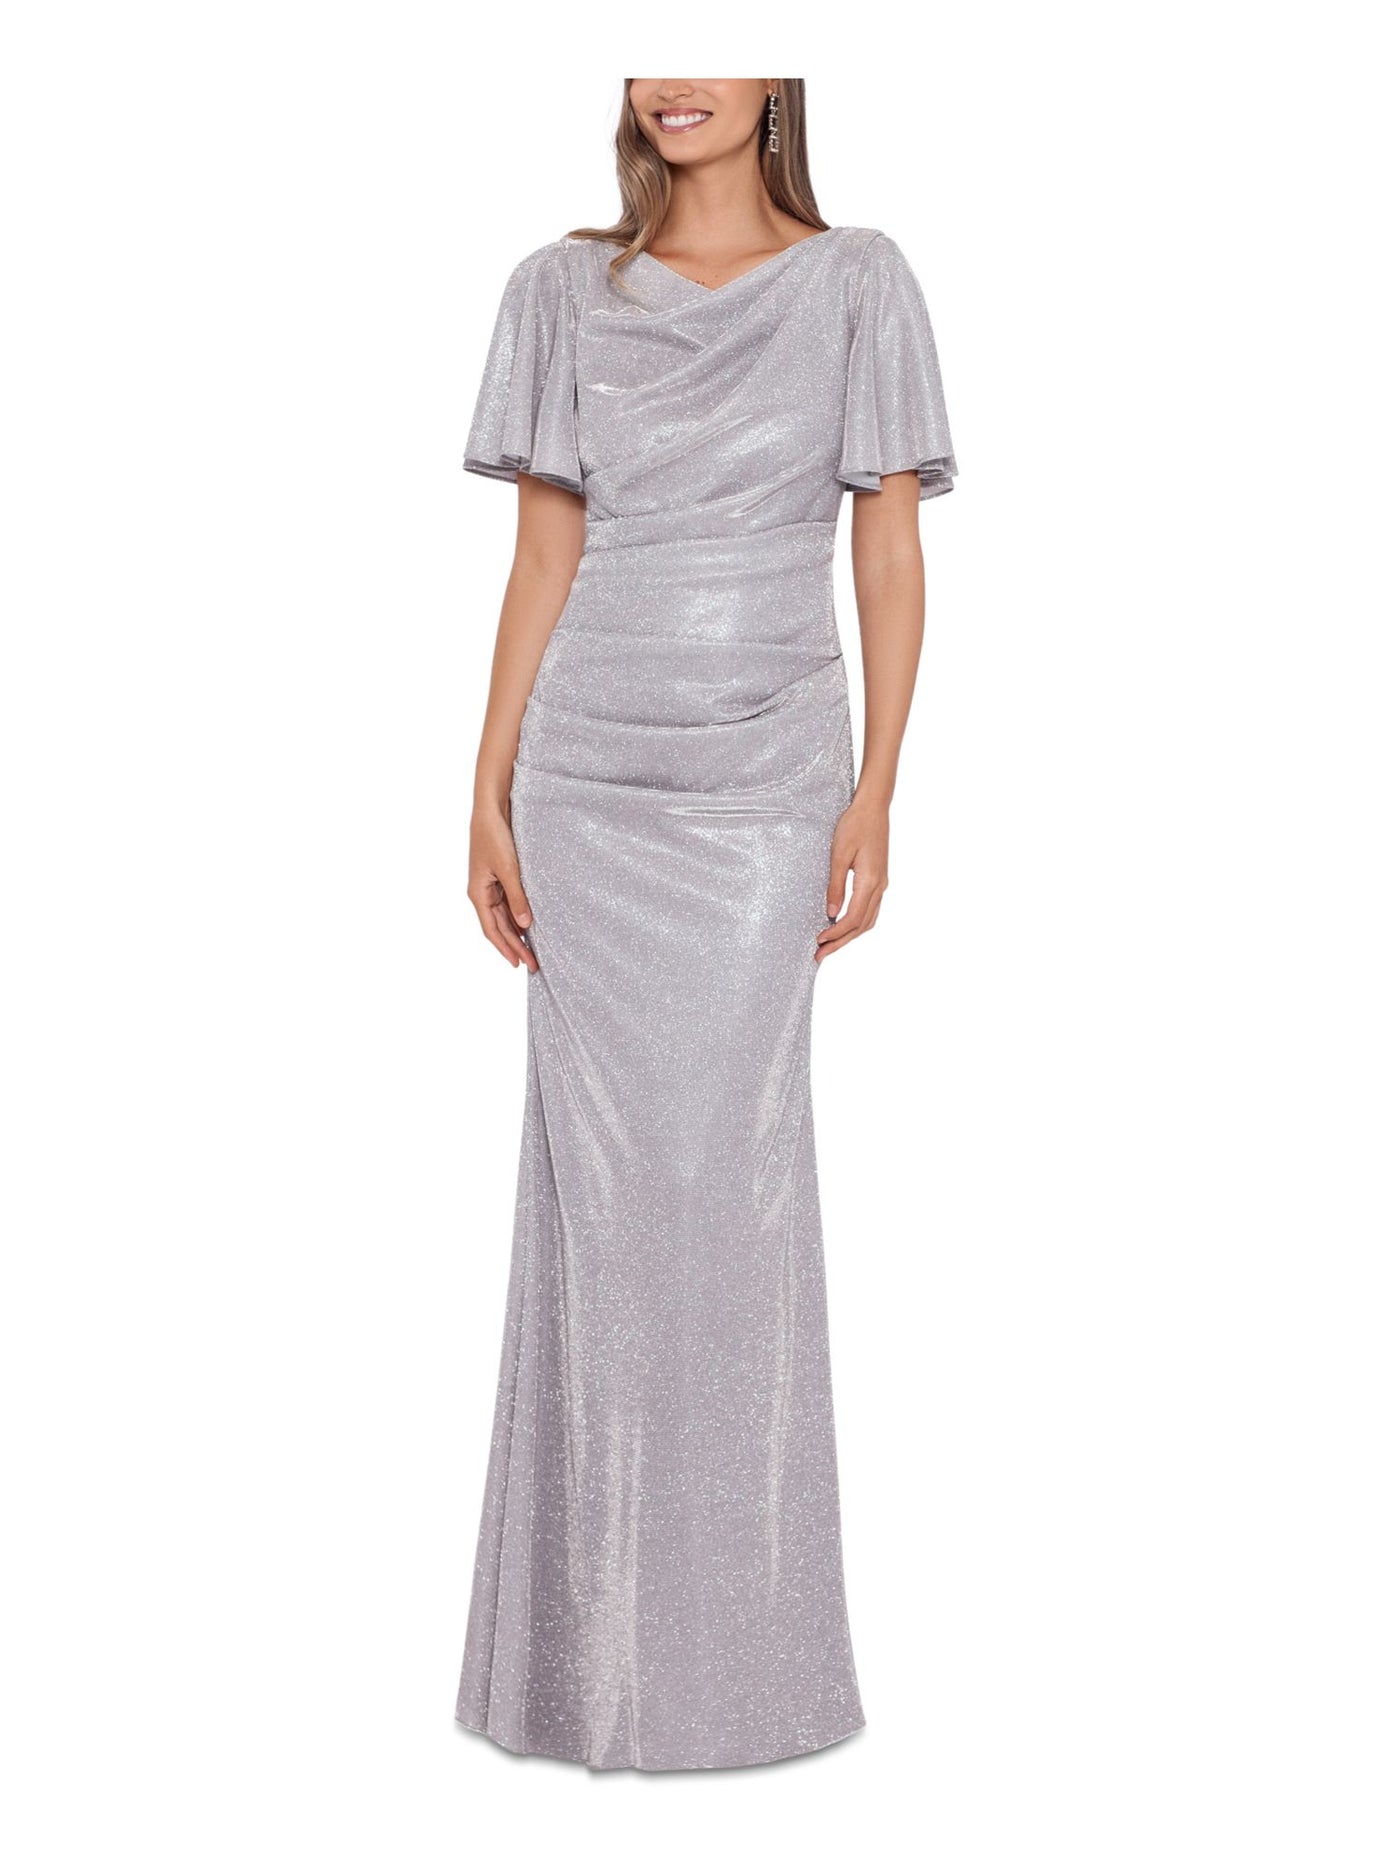 BETSY & ADAM Womens Silver Glitter Zippered Flutter Sleeve Boat Neck Full-Length Formal Gown Dress Petites 12P